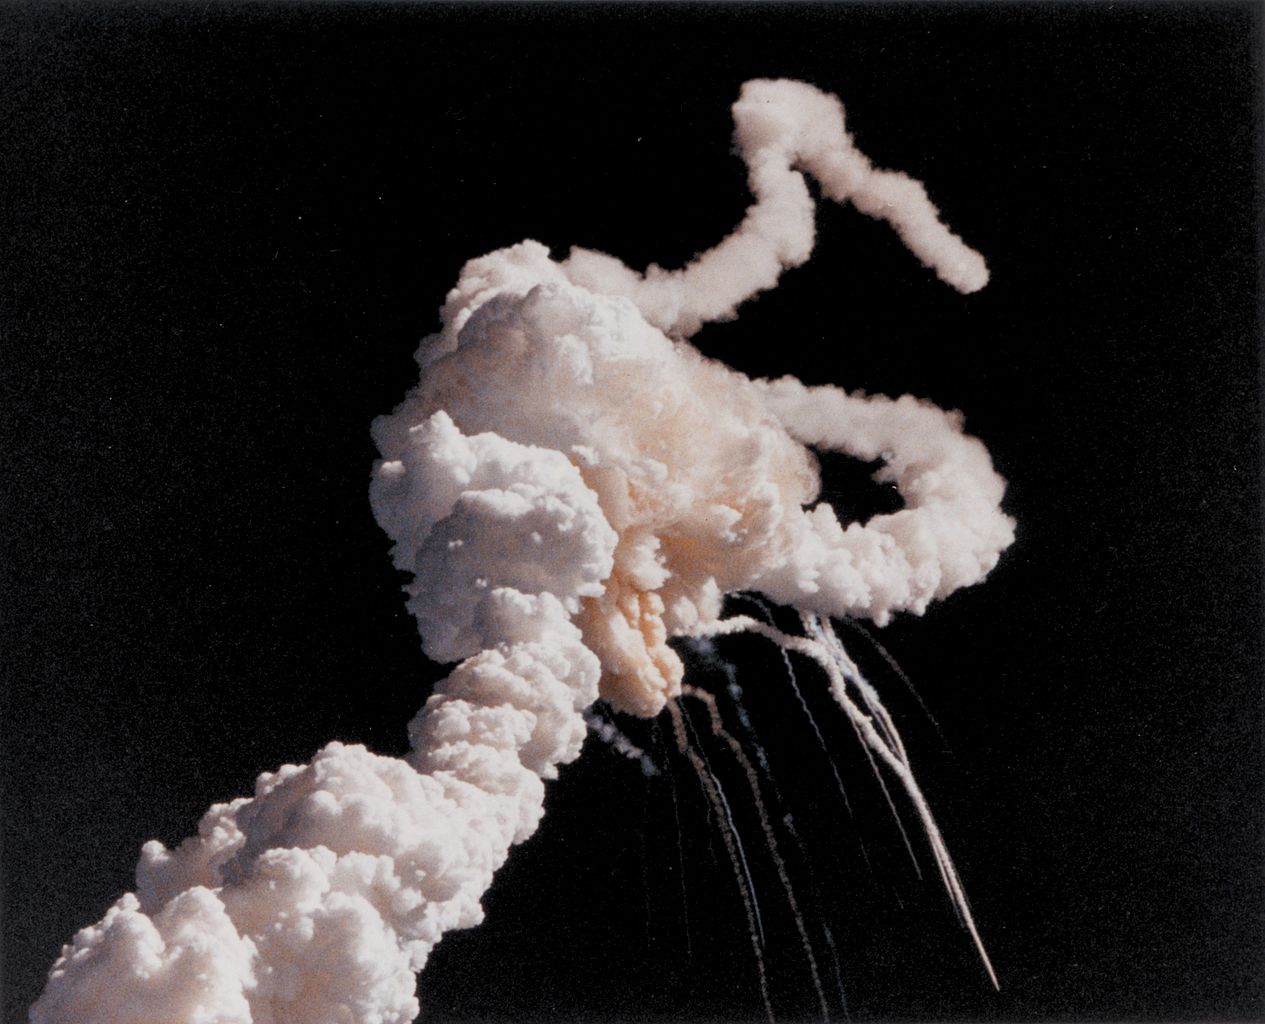 Challengerexplosion-11-6-92